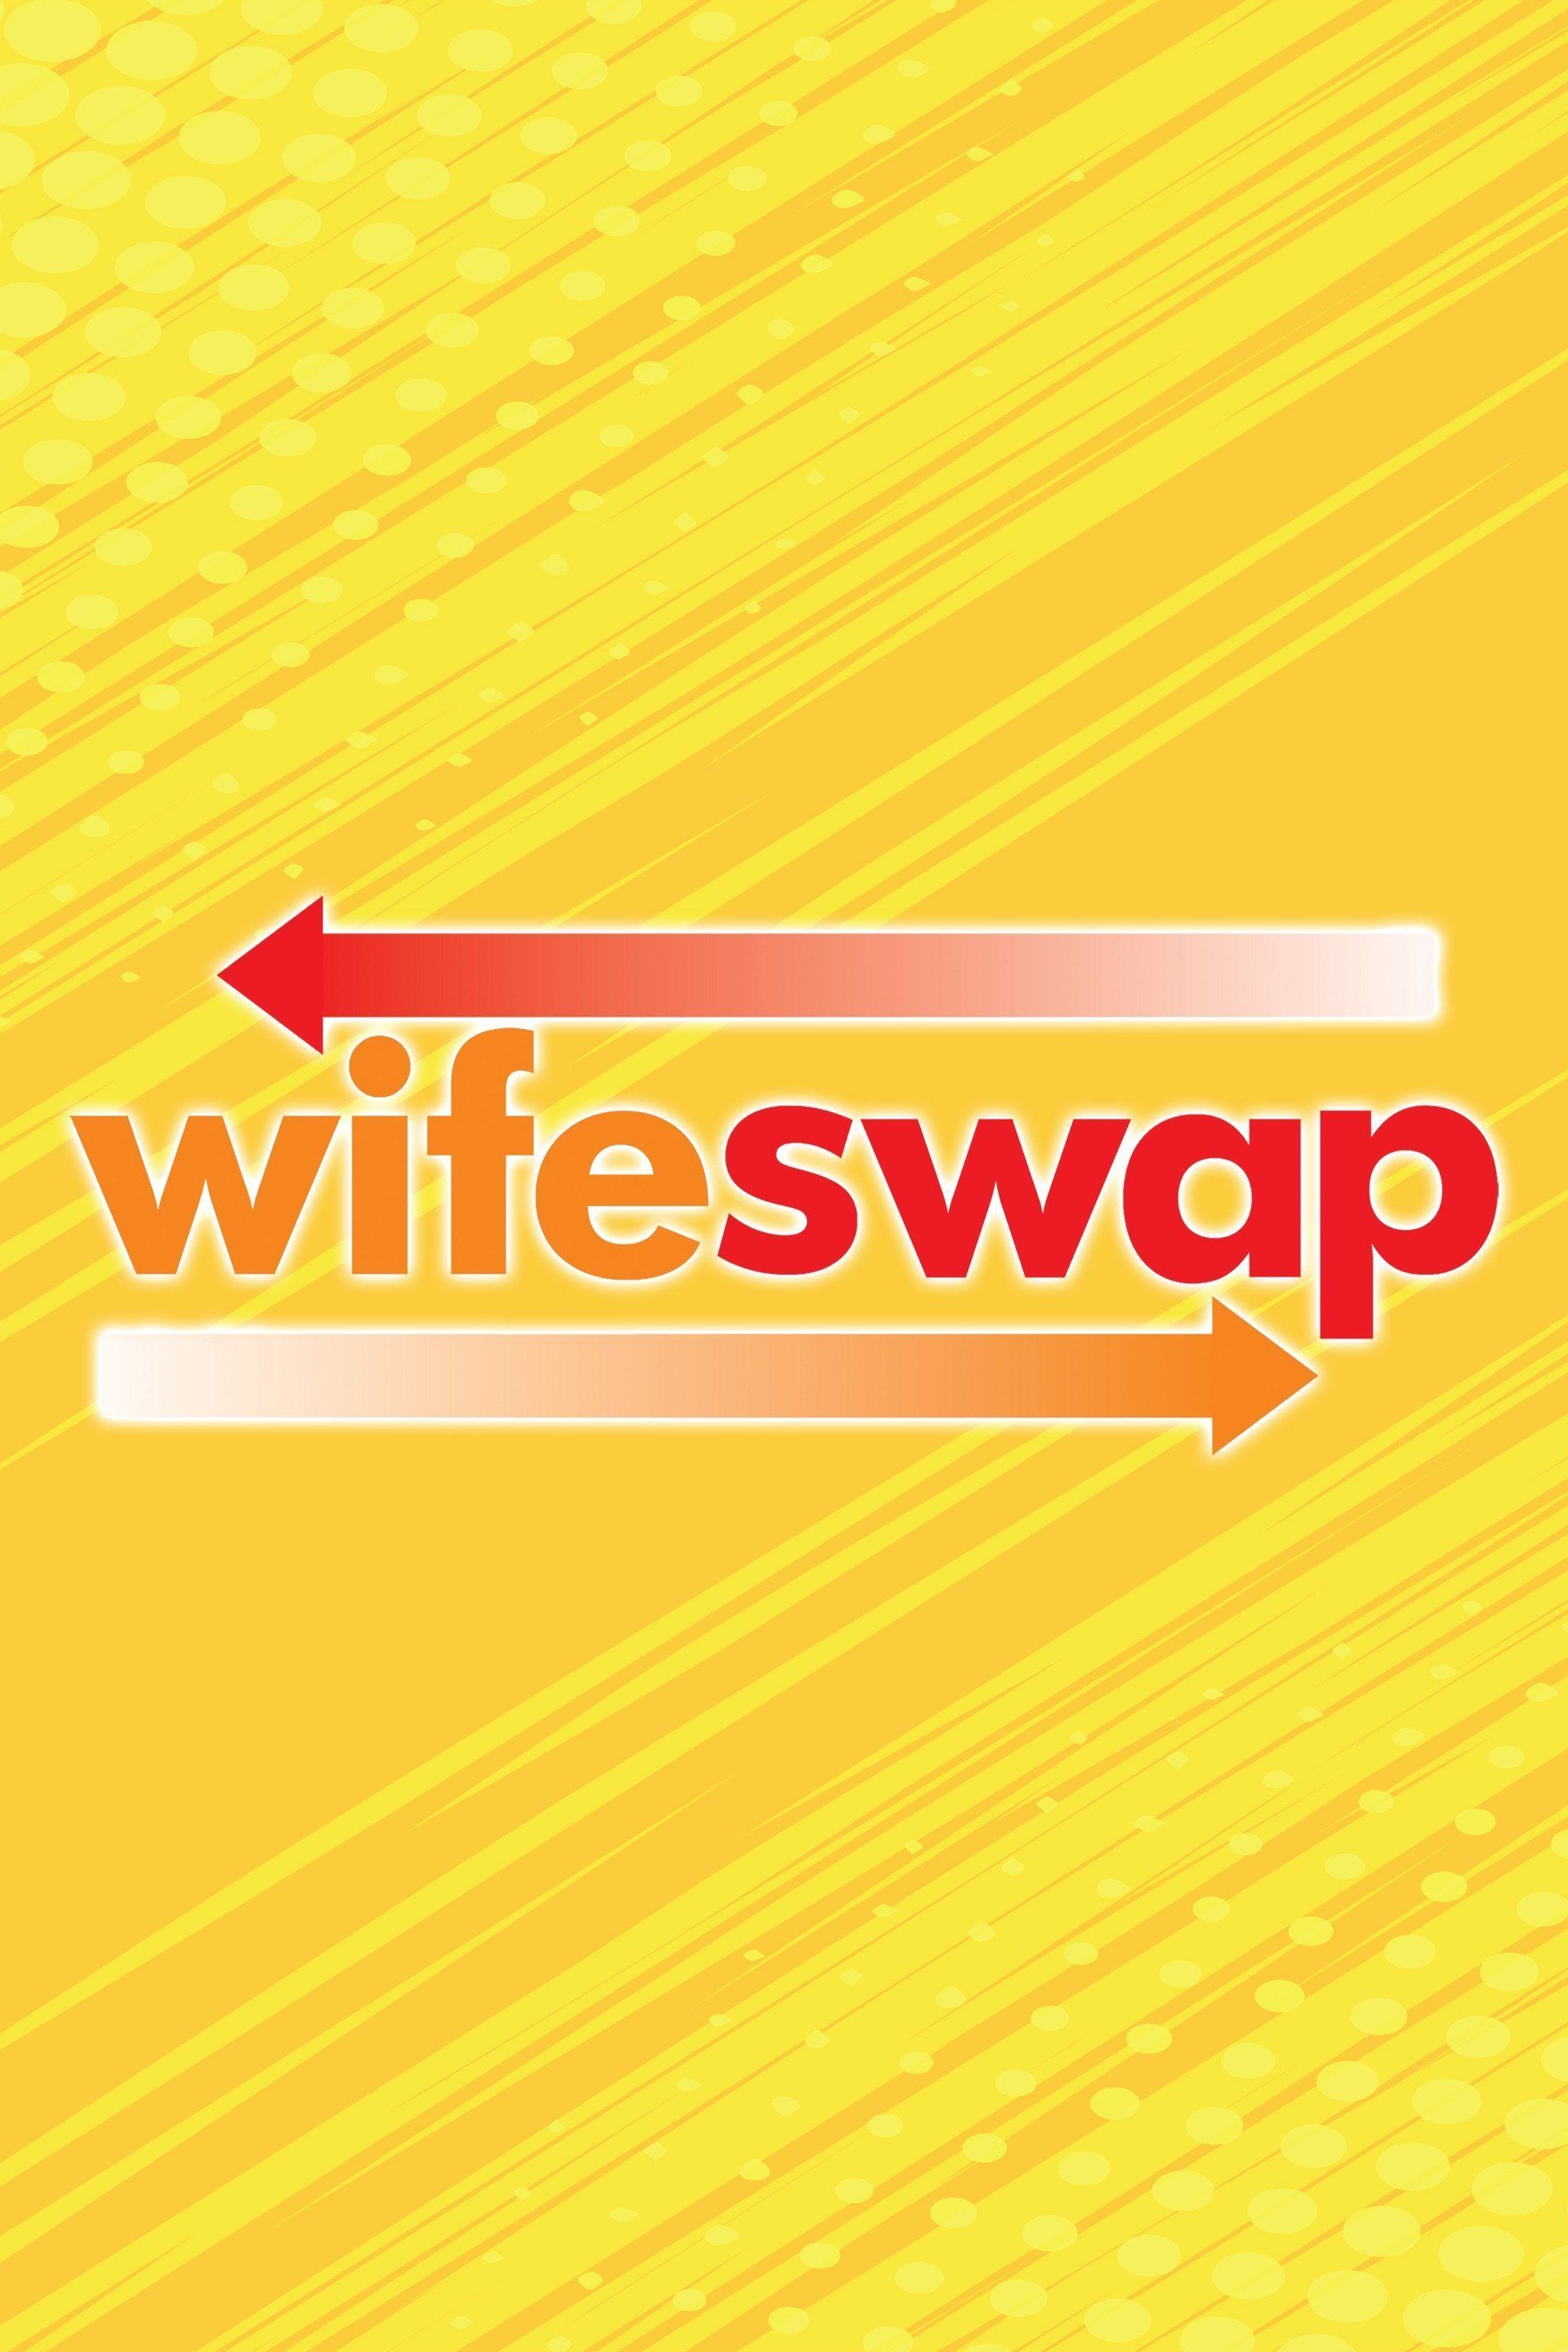 brandi delk recommends watch wife swap online full episodes pic